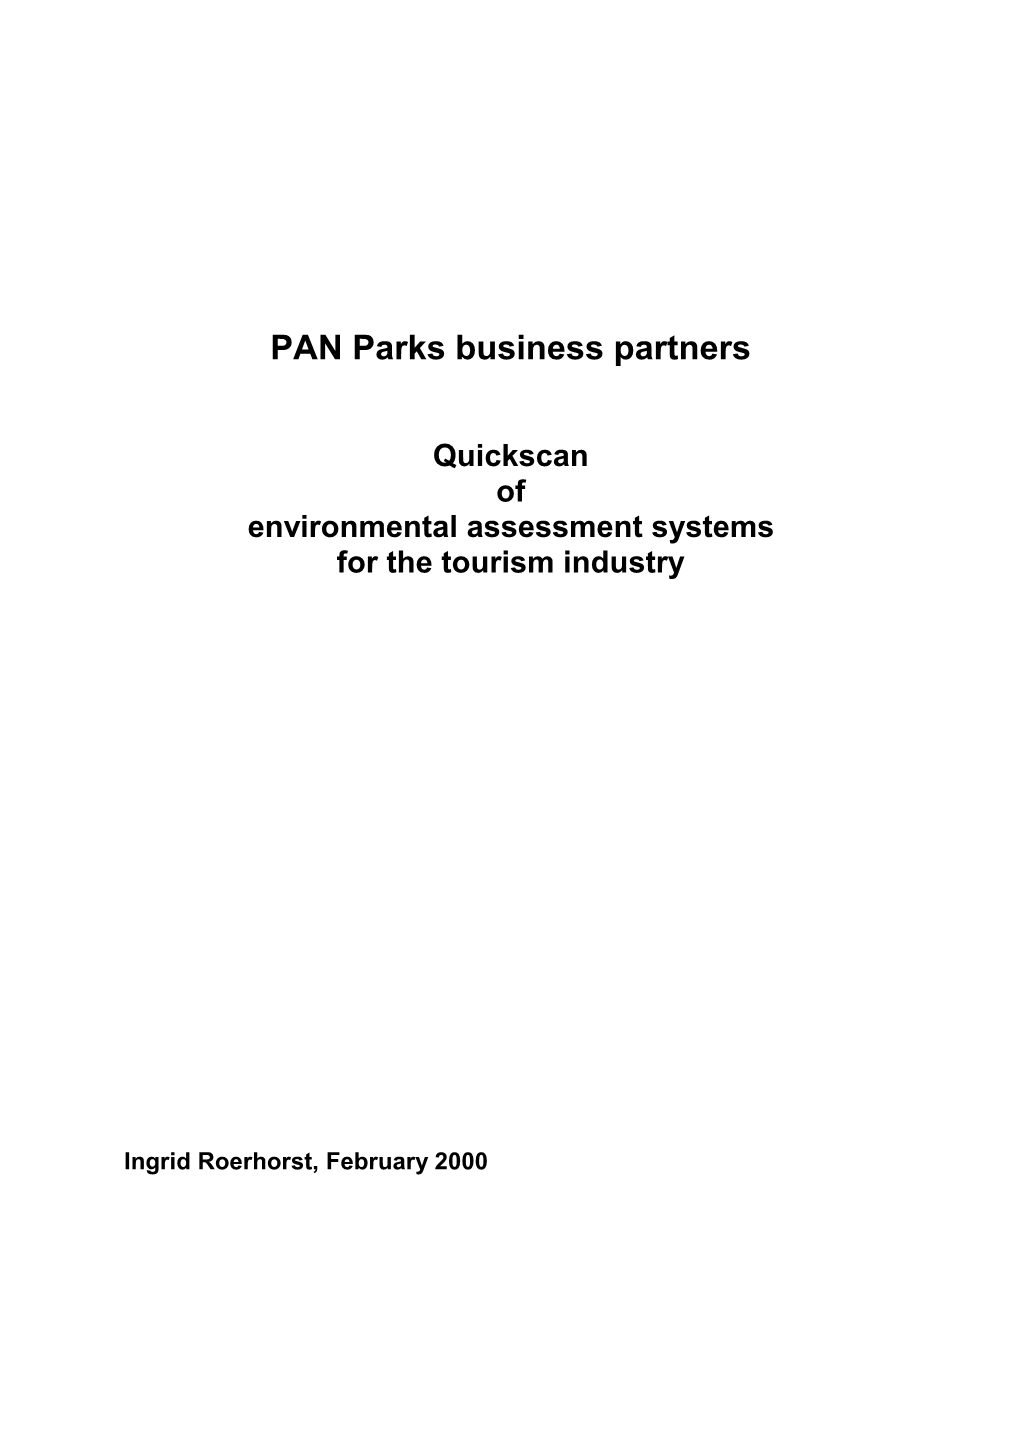 PAN Parks Business Partners